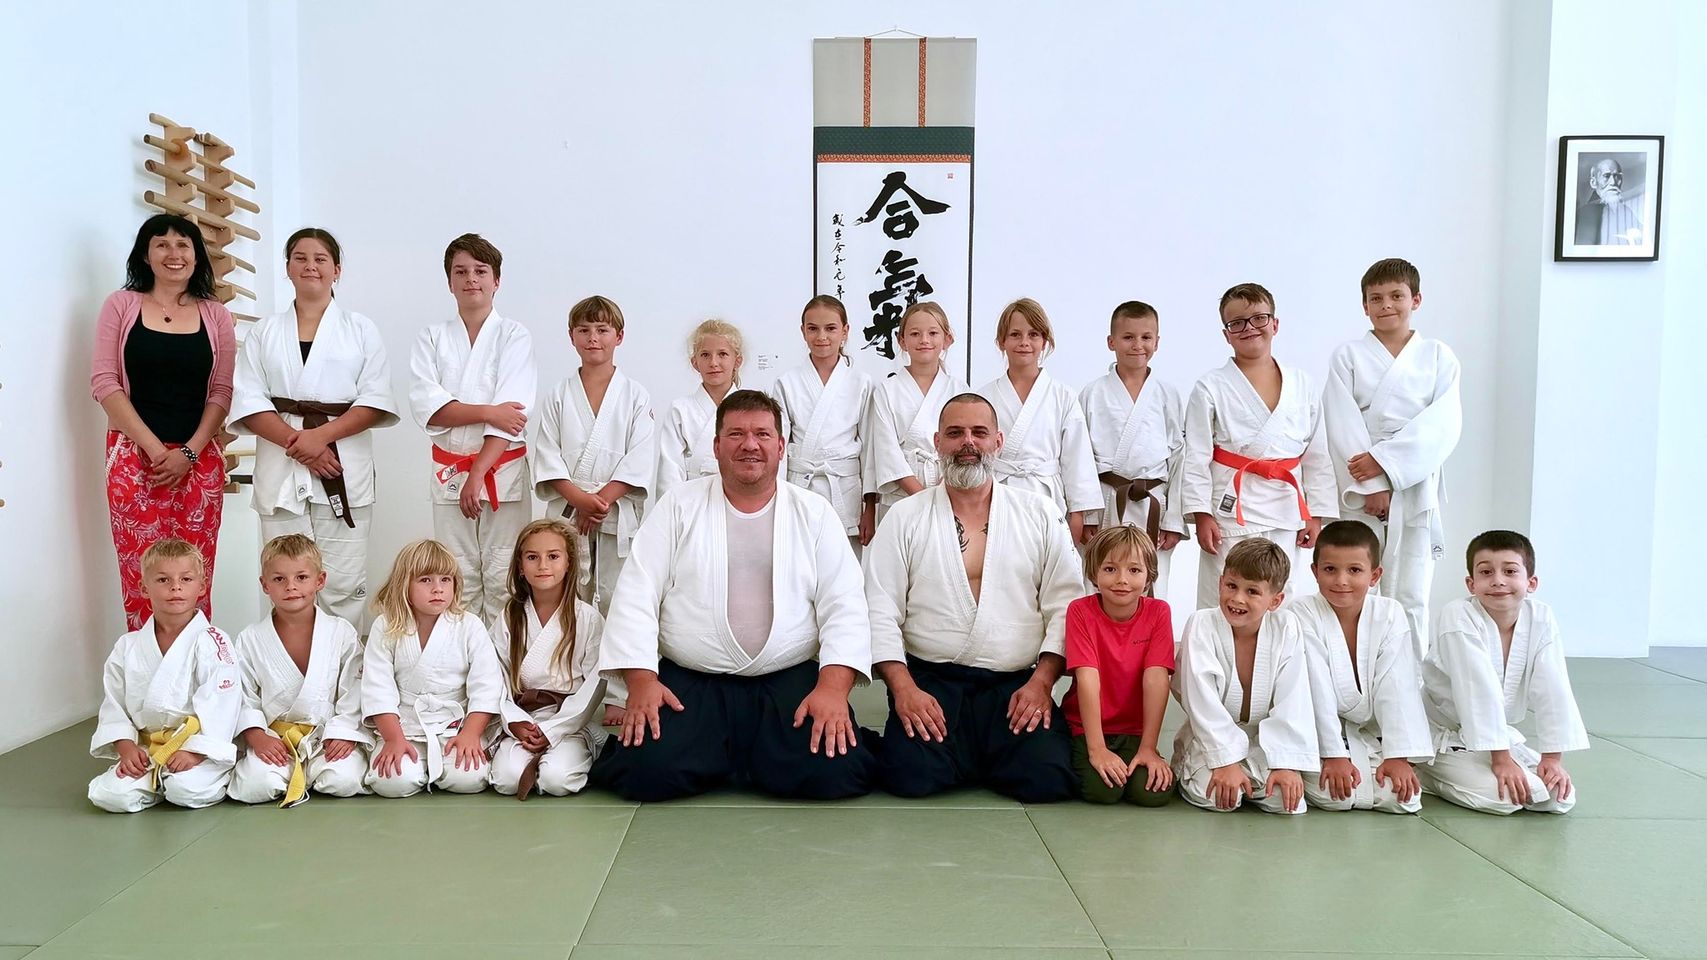 Denný aikido kemp pre deti | Aikido Dojo Trnava